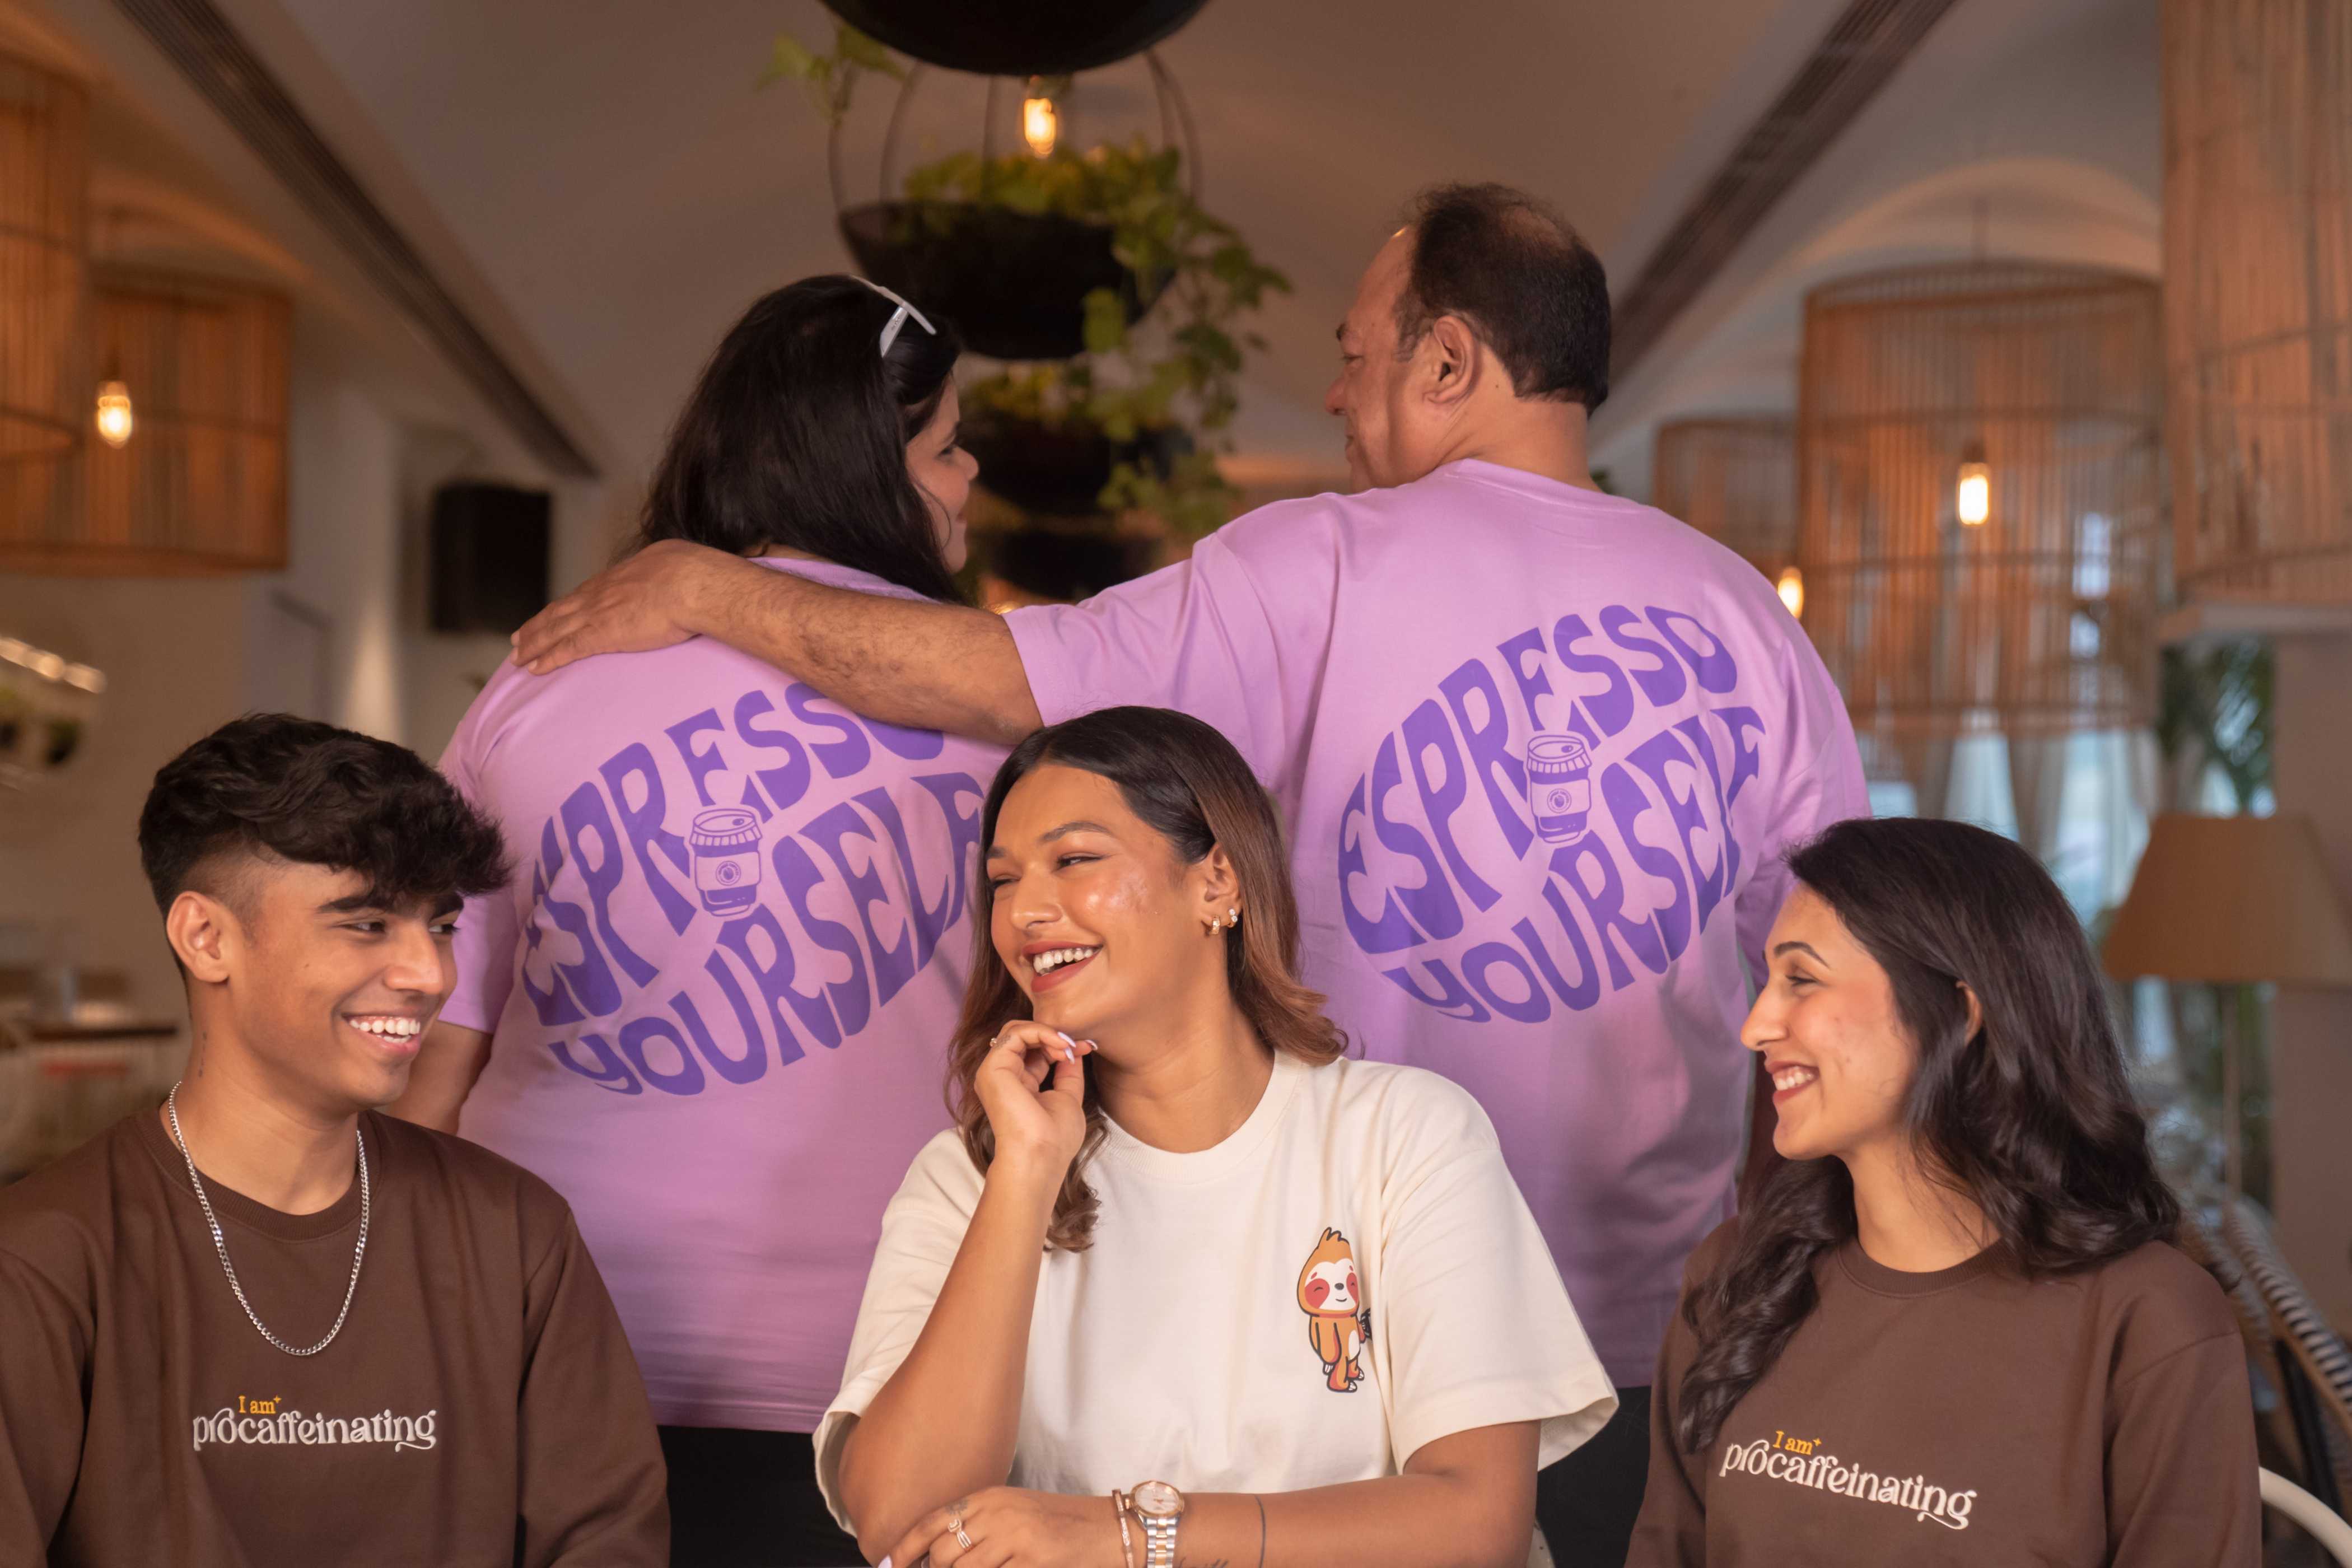 Espresso Yourself - Oversized T-shirt - Lavender